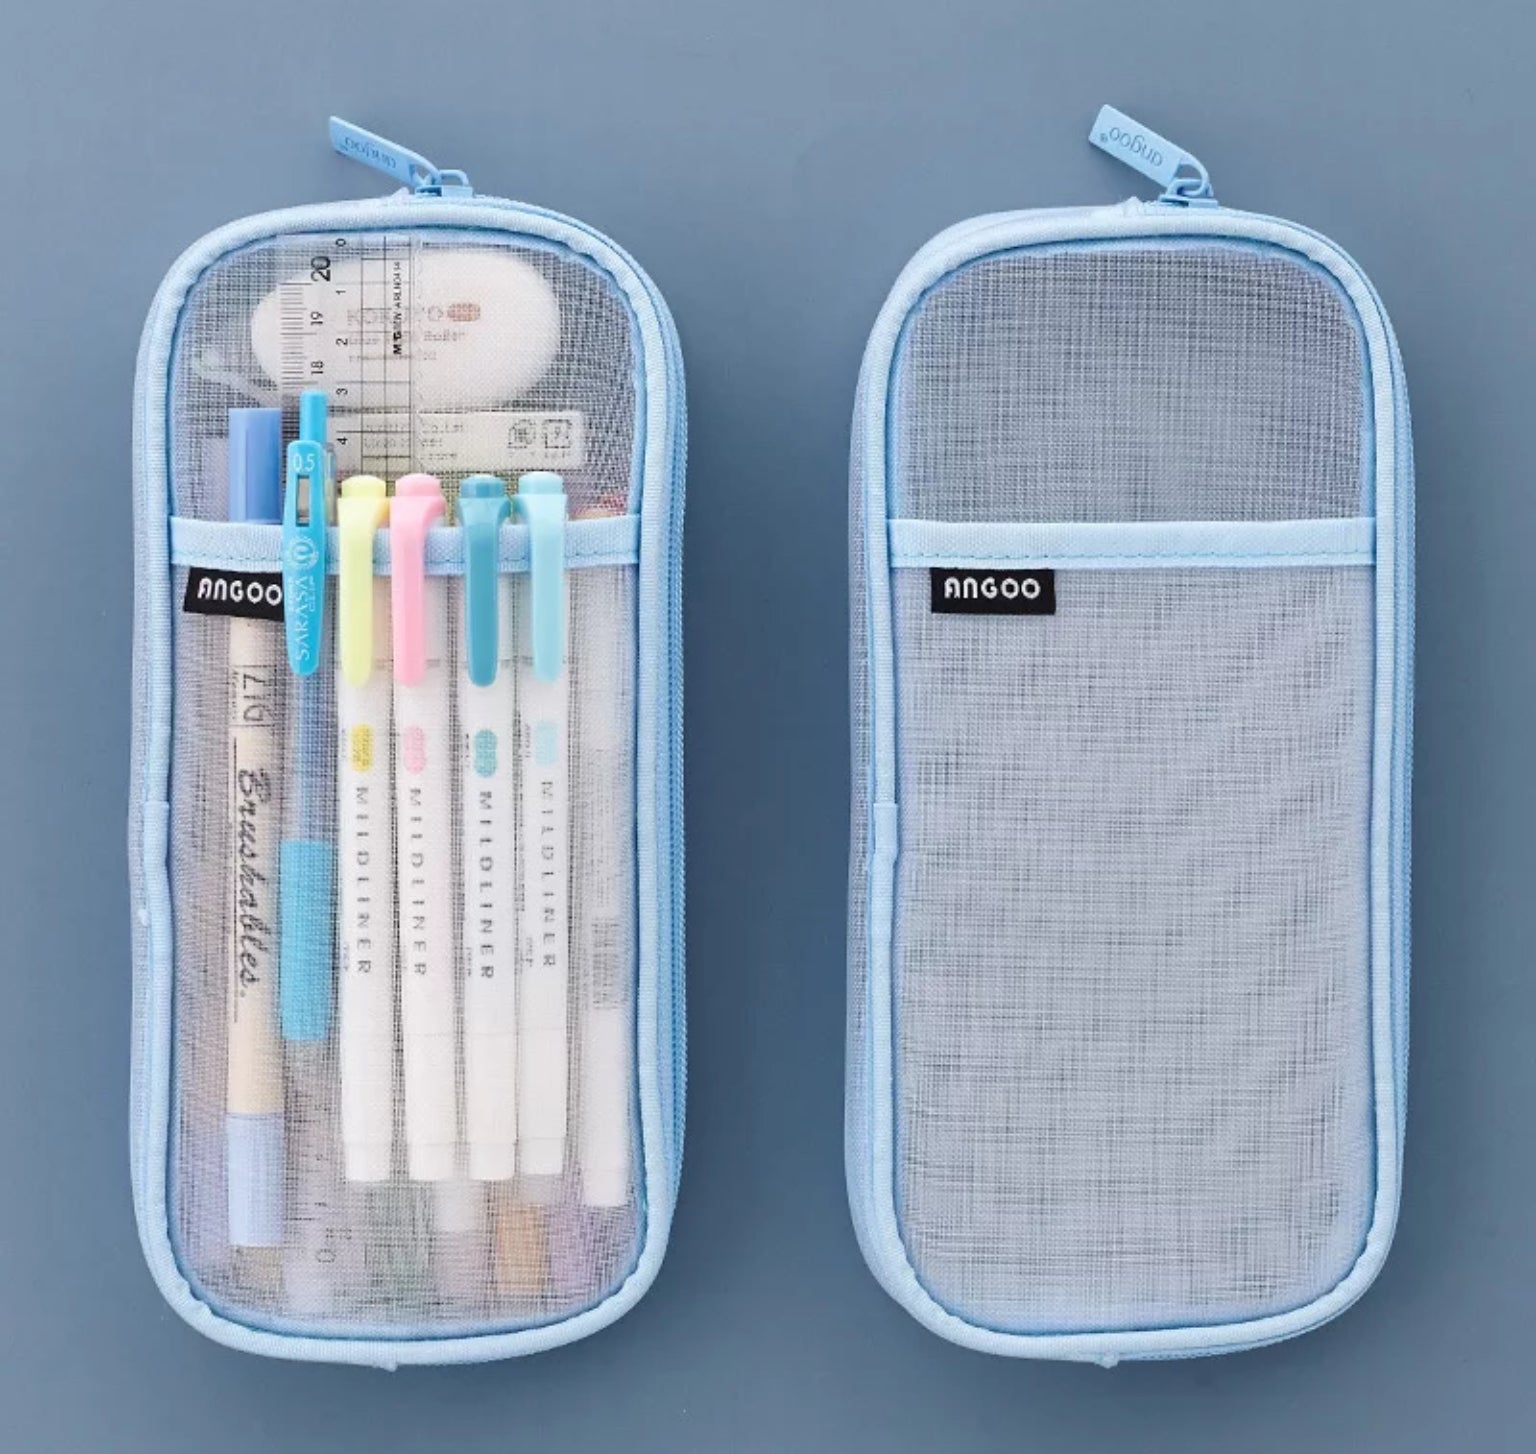 pencil box/pencil case/pencil pouch